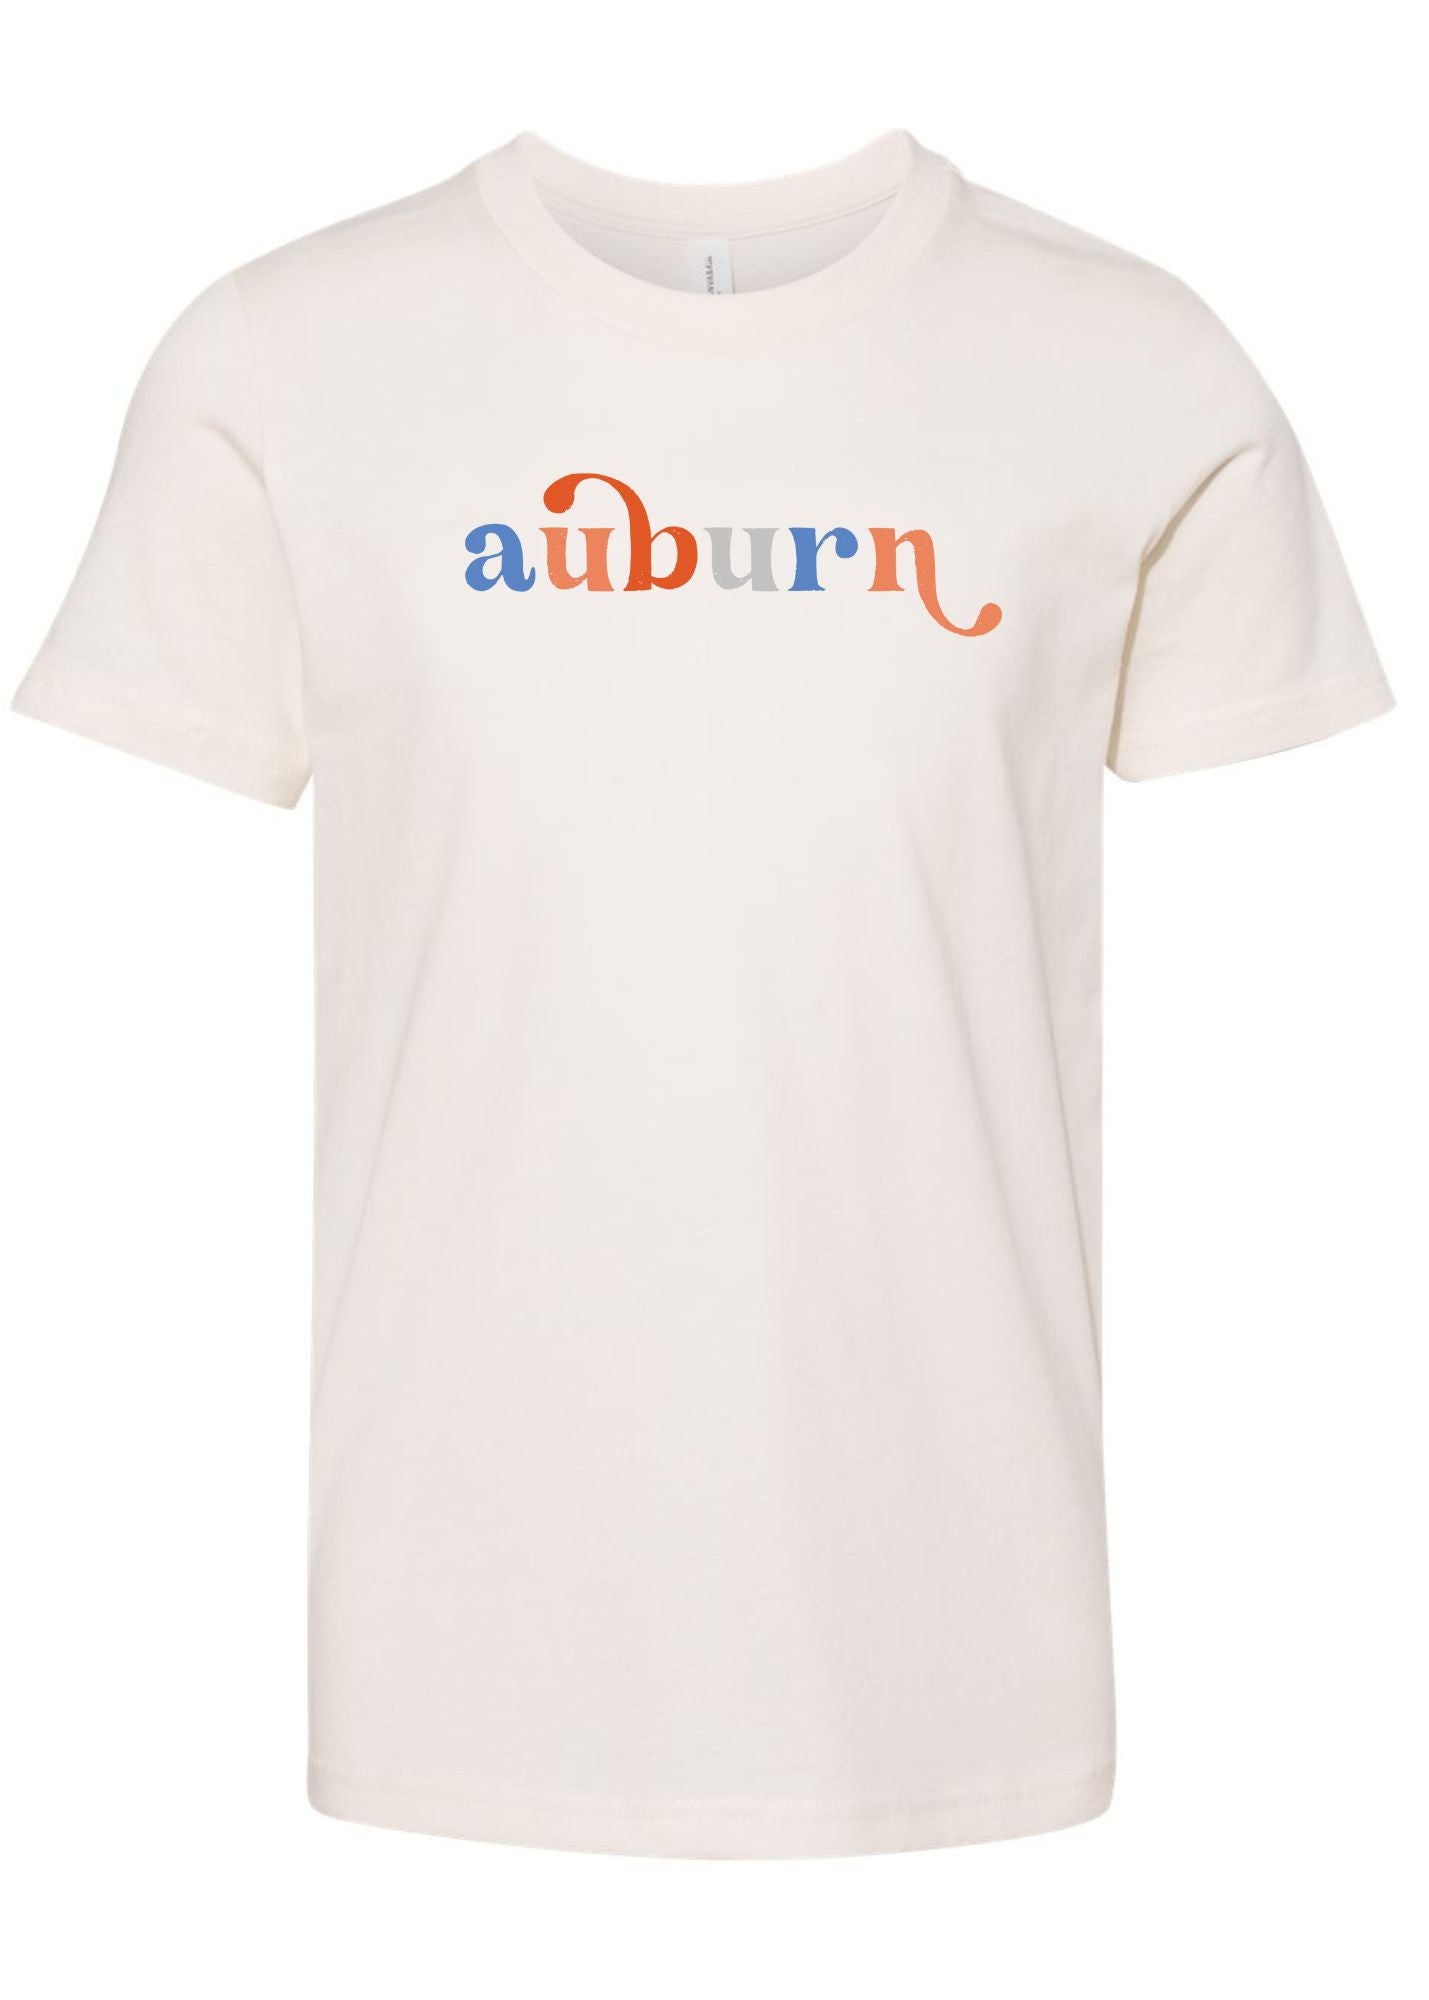 Auburn Multi | Kids Tee | RTS-Sister Shirts-Sister Shirts, Cute & Custom Tees for Mama & Littles in Trussville, Alabama.